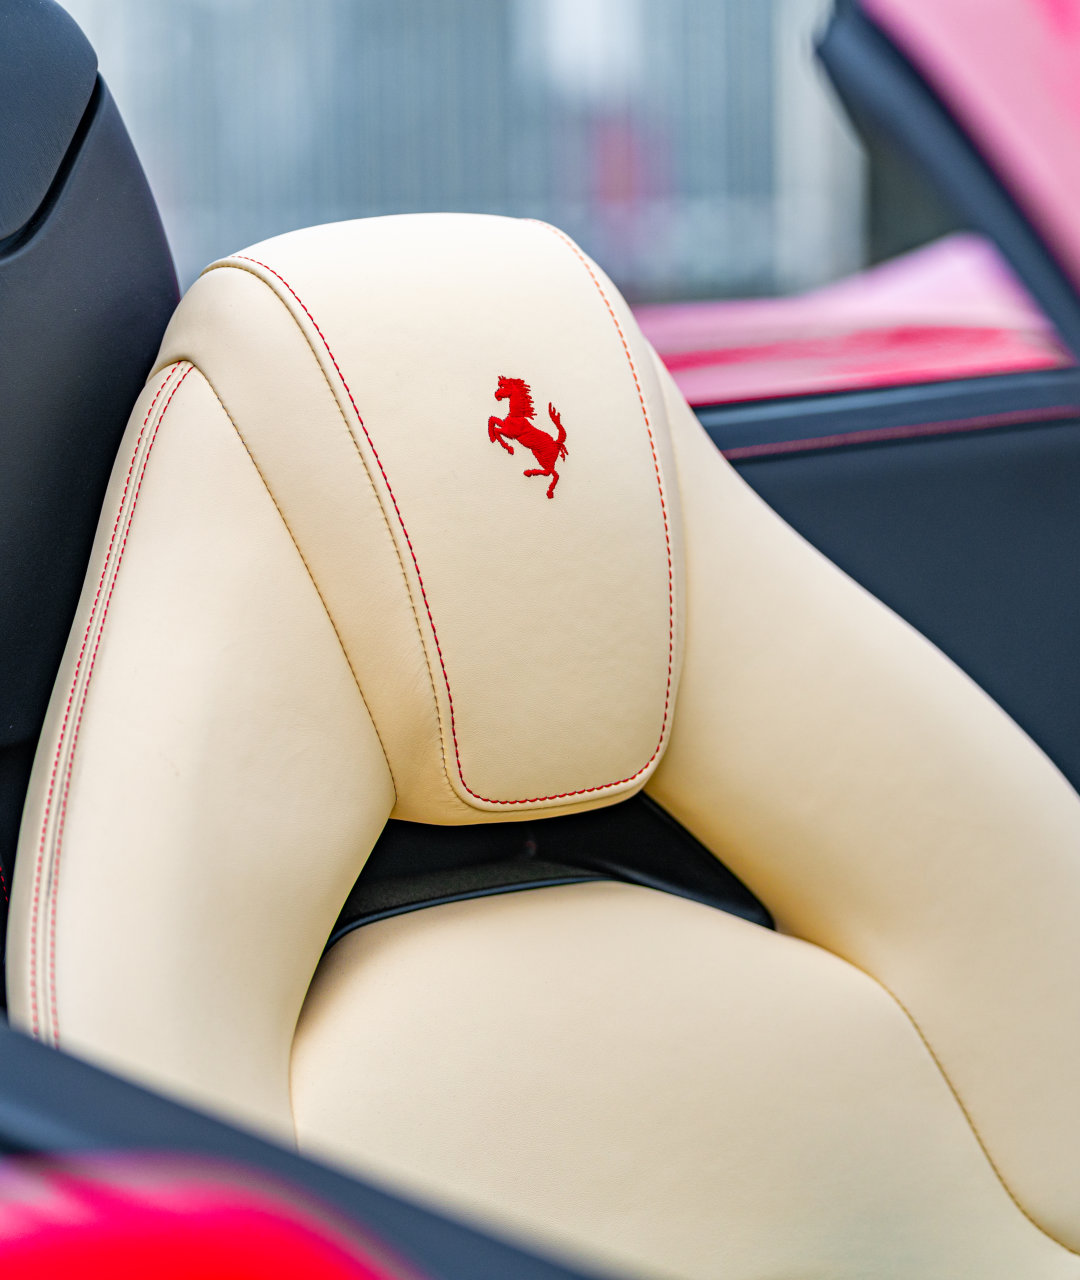 2019 Ferrari 488 Spider GTS Rosso Crema portrait seat backs